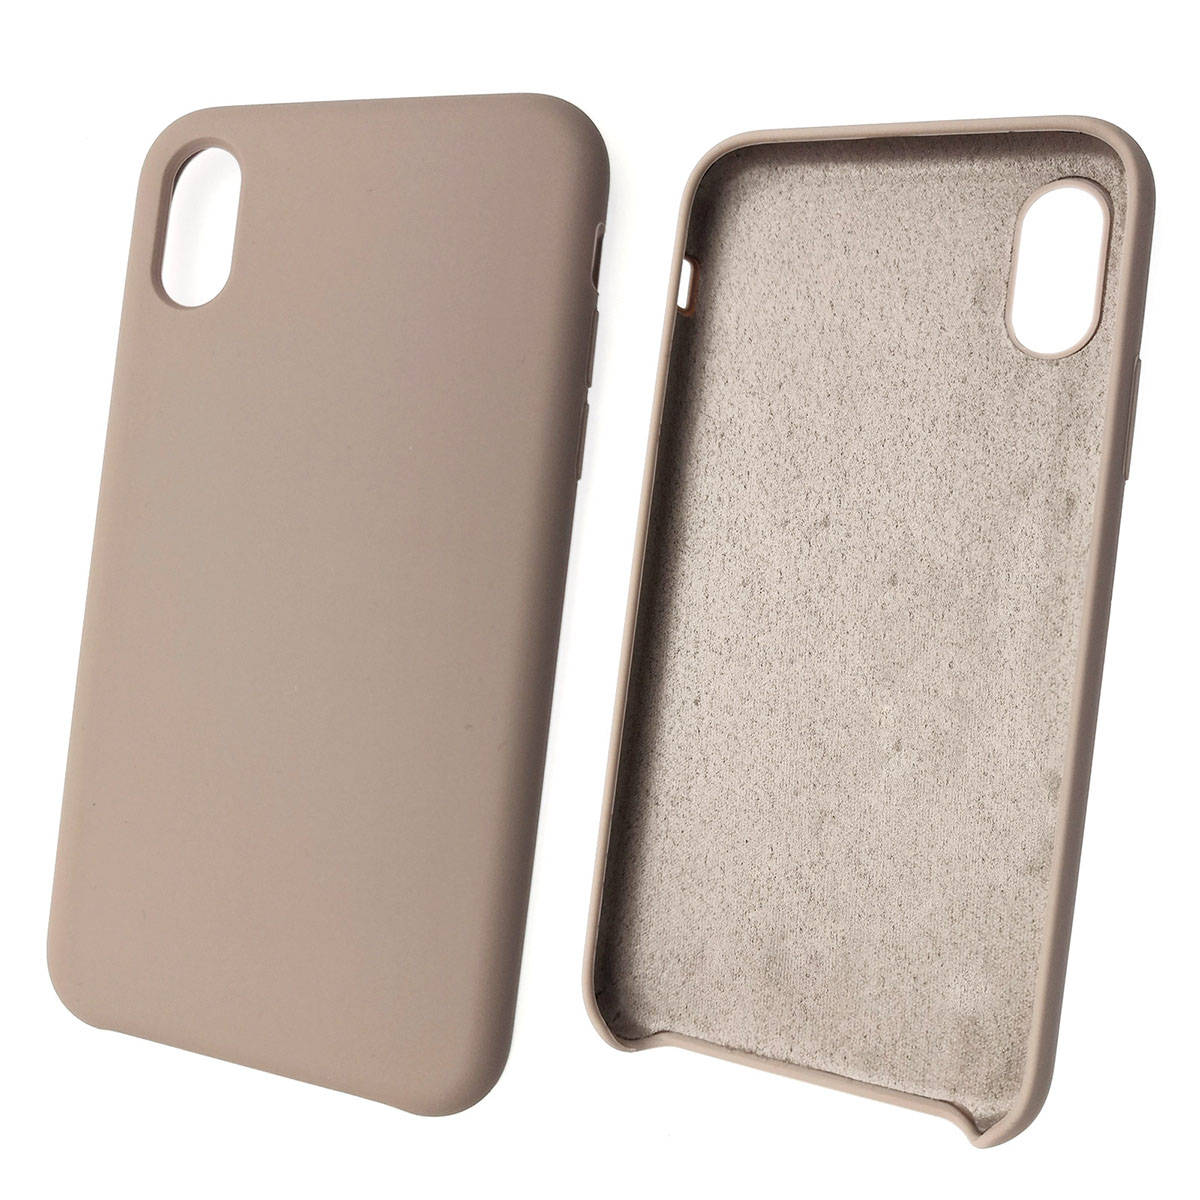 Чехол накладка Silicon Case для APPLE iPhone X, XS, силикон, бархат, цвет лаванда.